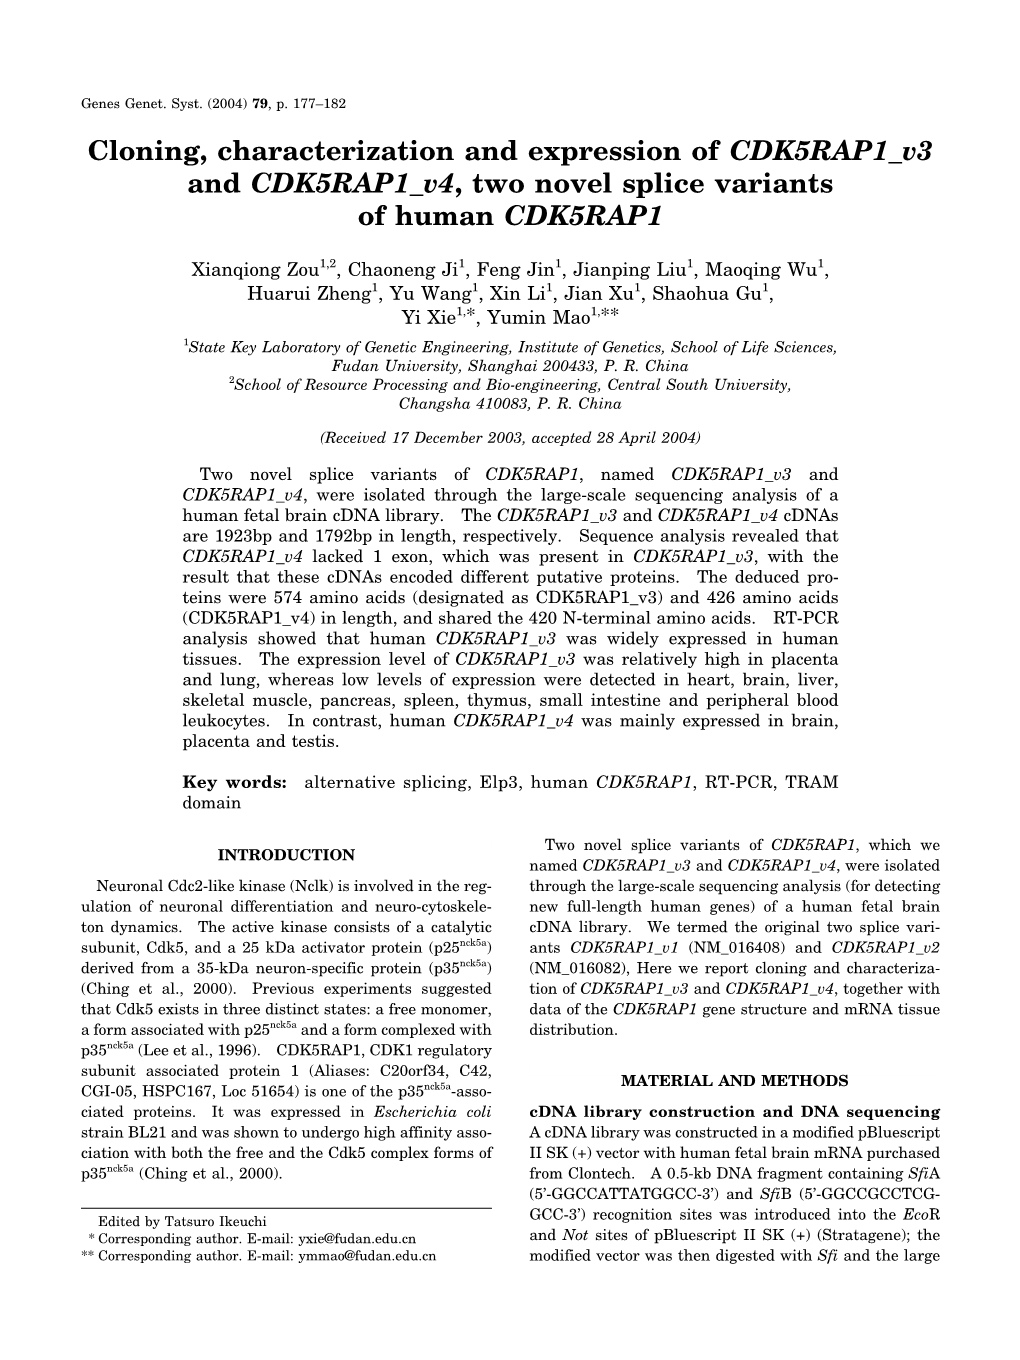 Cloning, Characterization and Expression of CDK5RAP1 V3 and CDK5RAP1 V4, Two Novel Splice Variants of Human CDK5RAP1